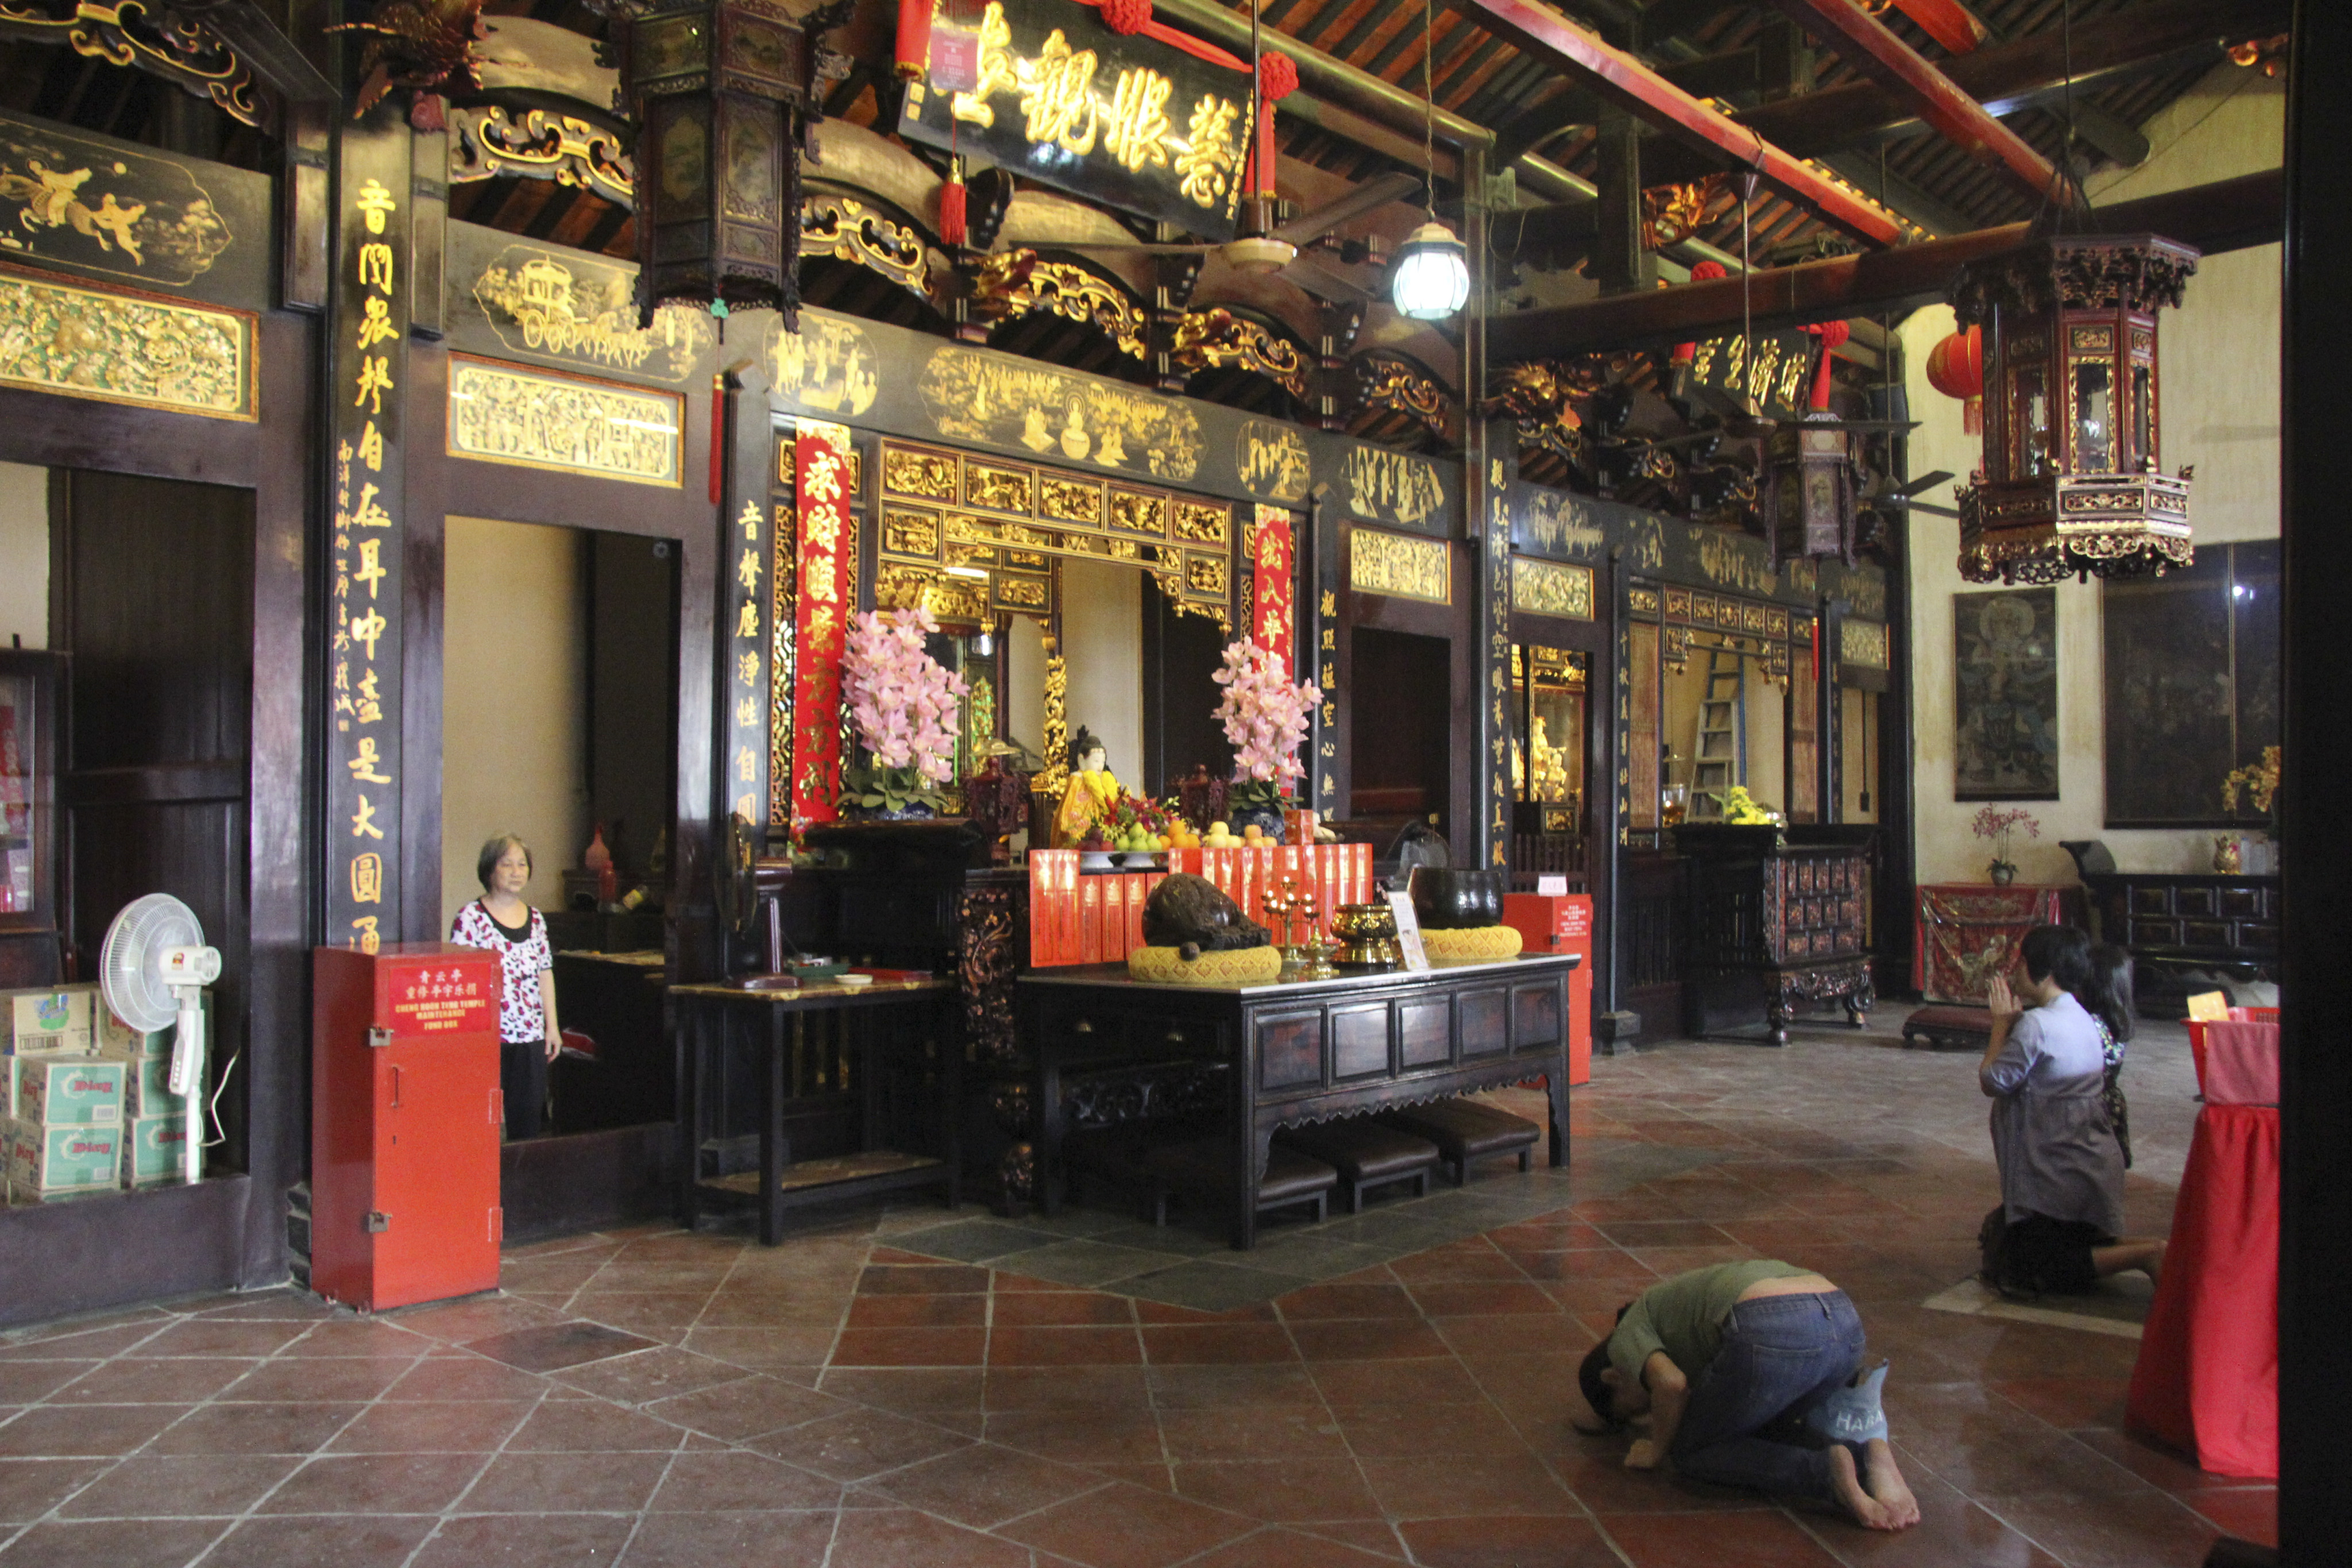 Cheng Hoon Teng is Malaysia’s oldest Chinese temple. Photo: John Brunton